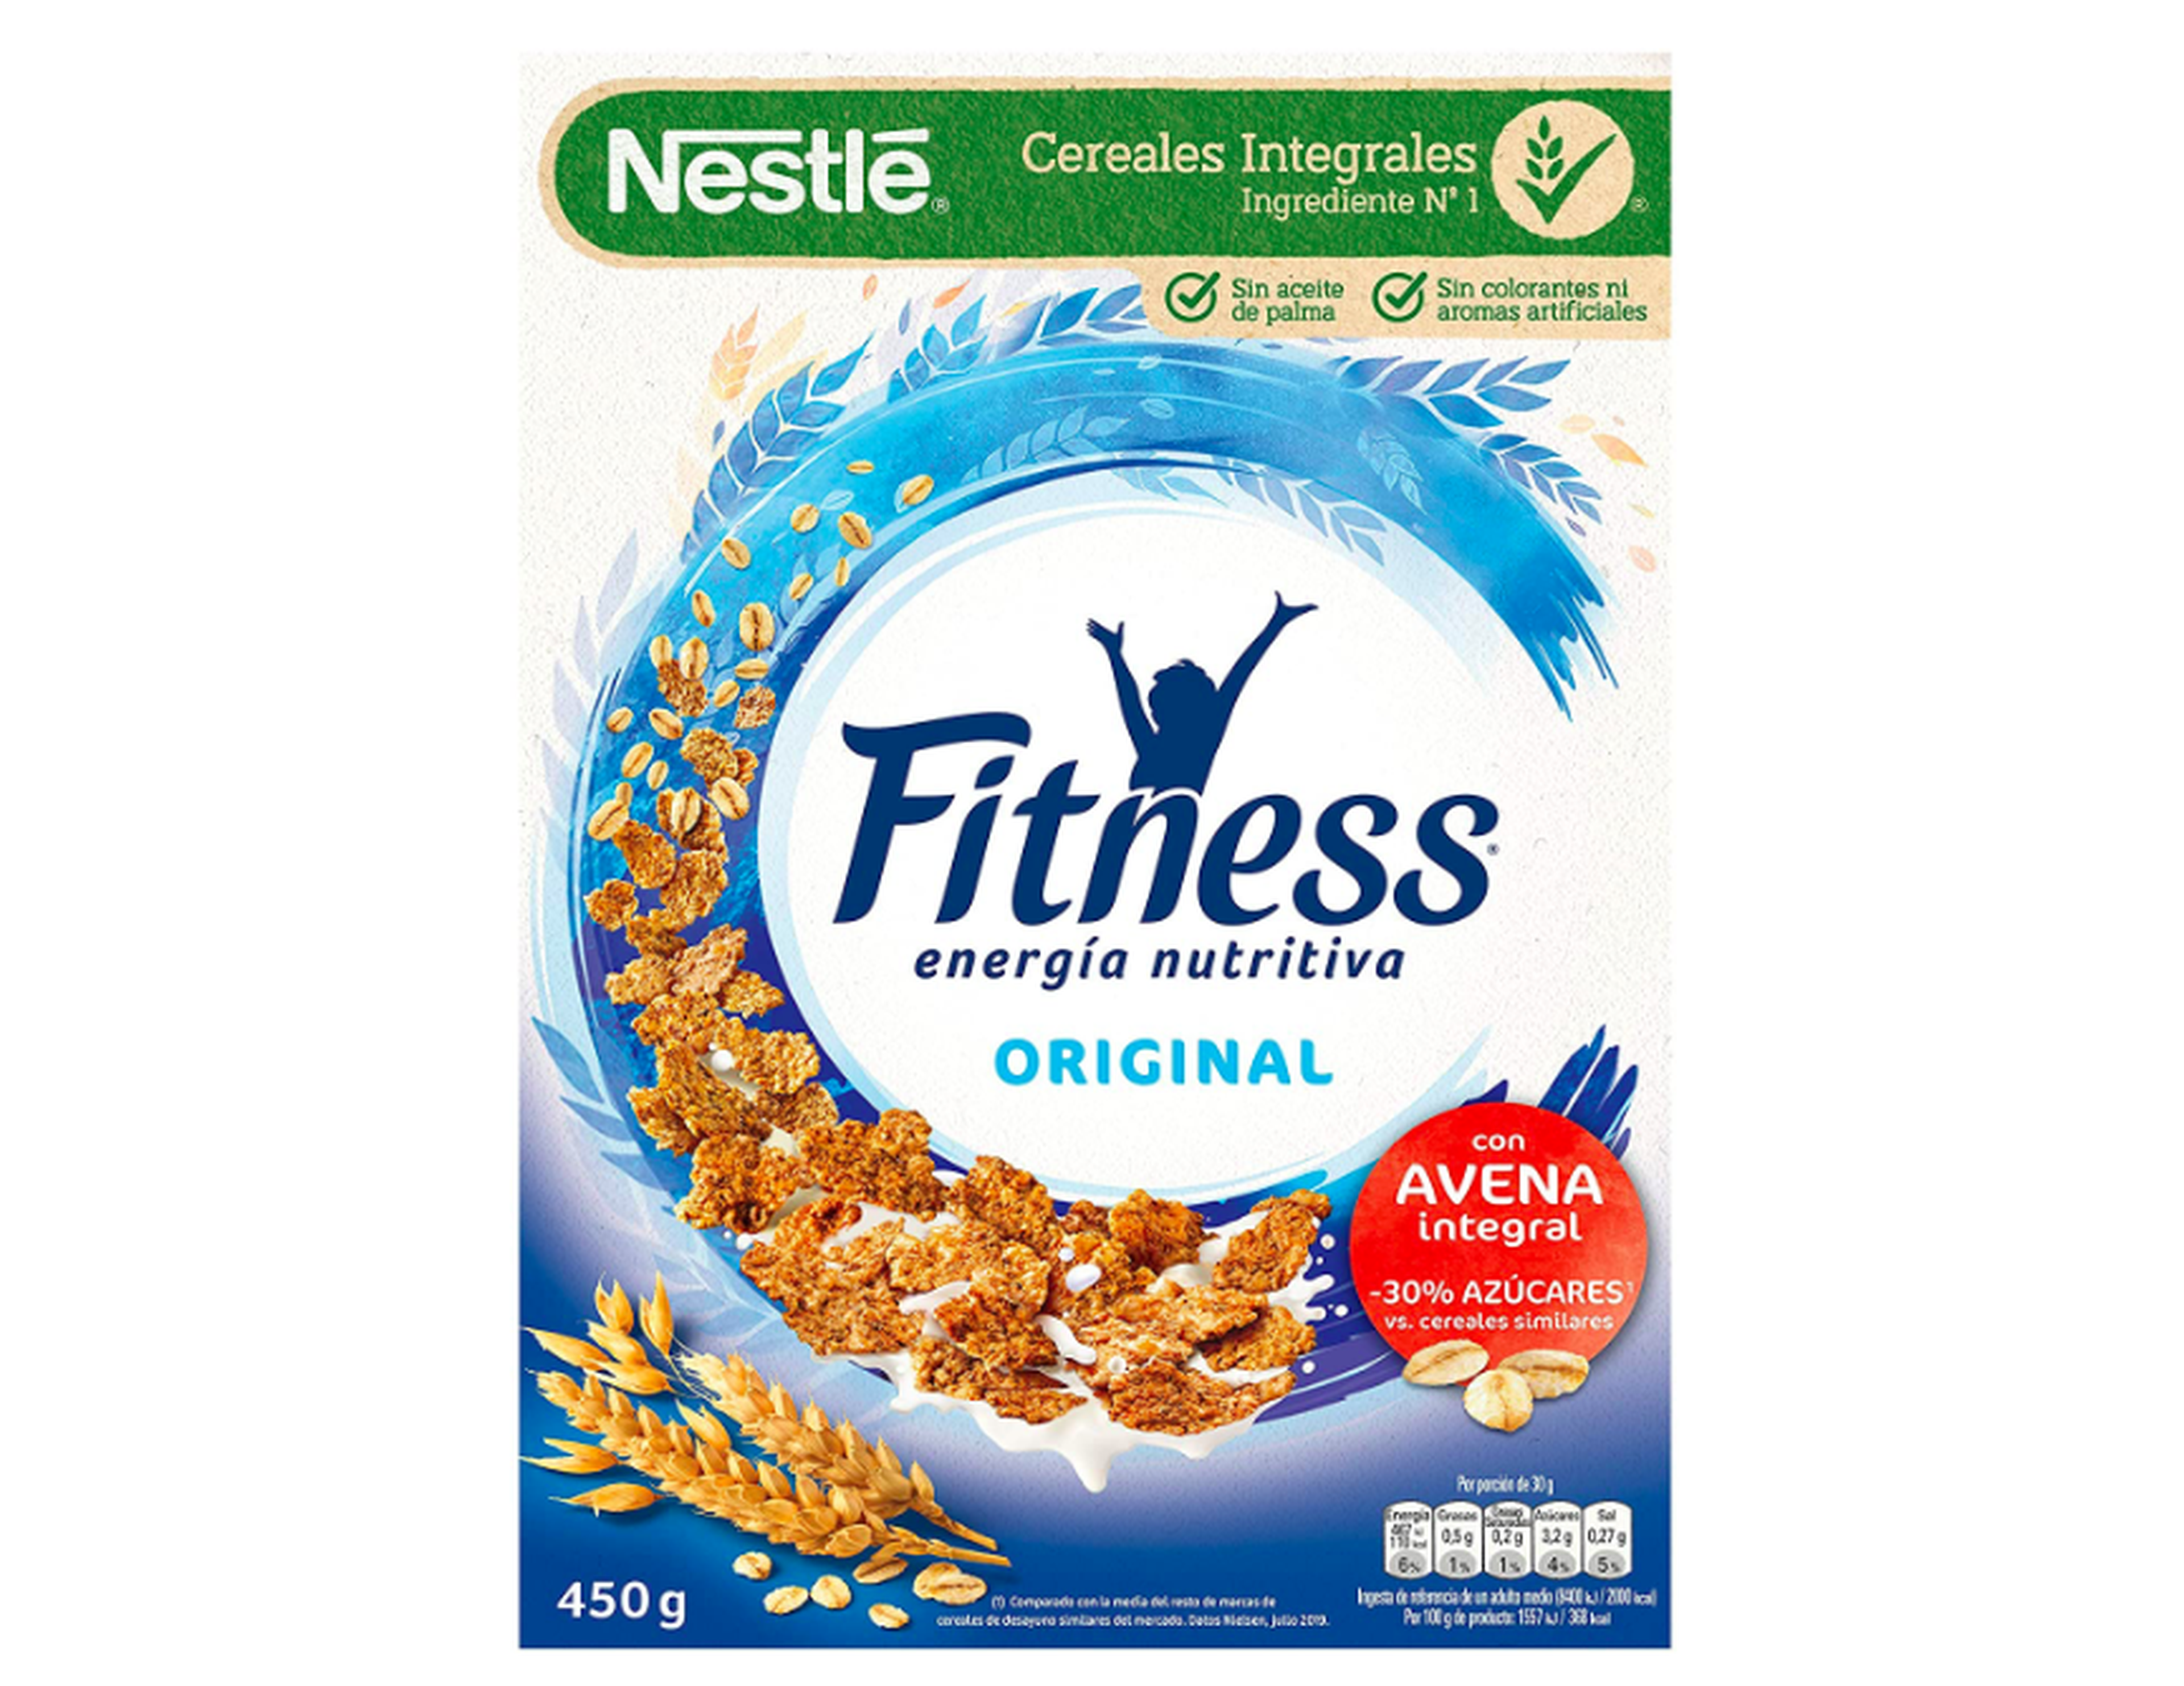 Cereales Nestlé Fitness Original - Copos de trigo integral, arroz y avena integral tostados - 12 paquetes de cereales de 450g.